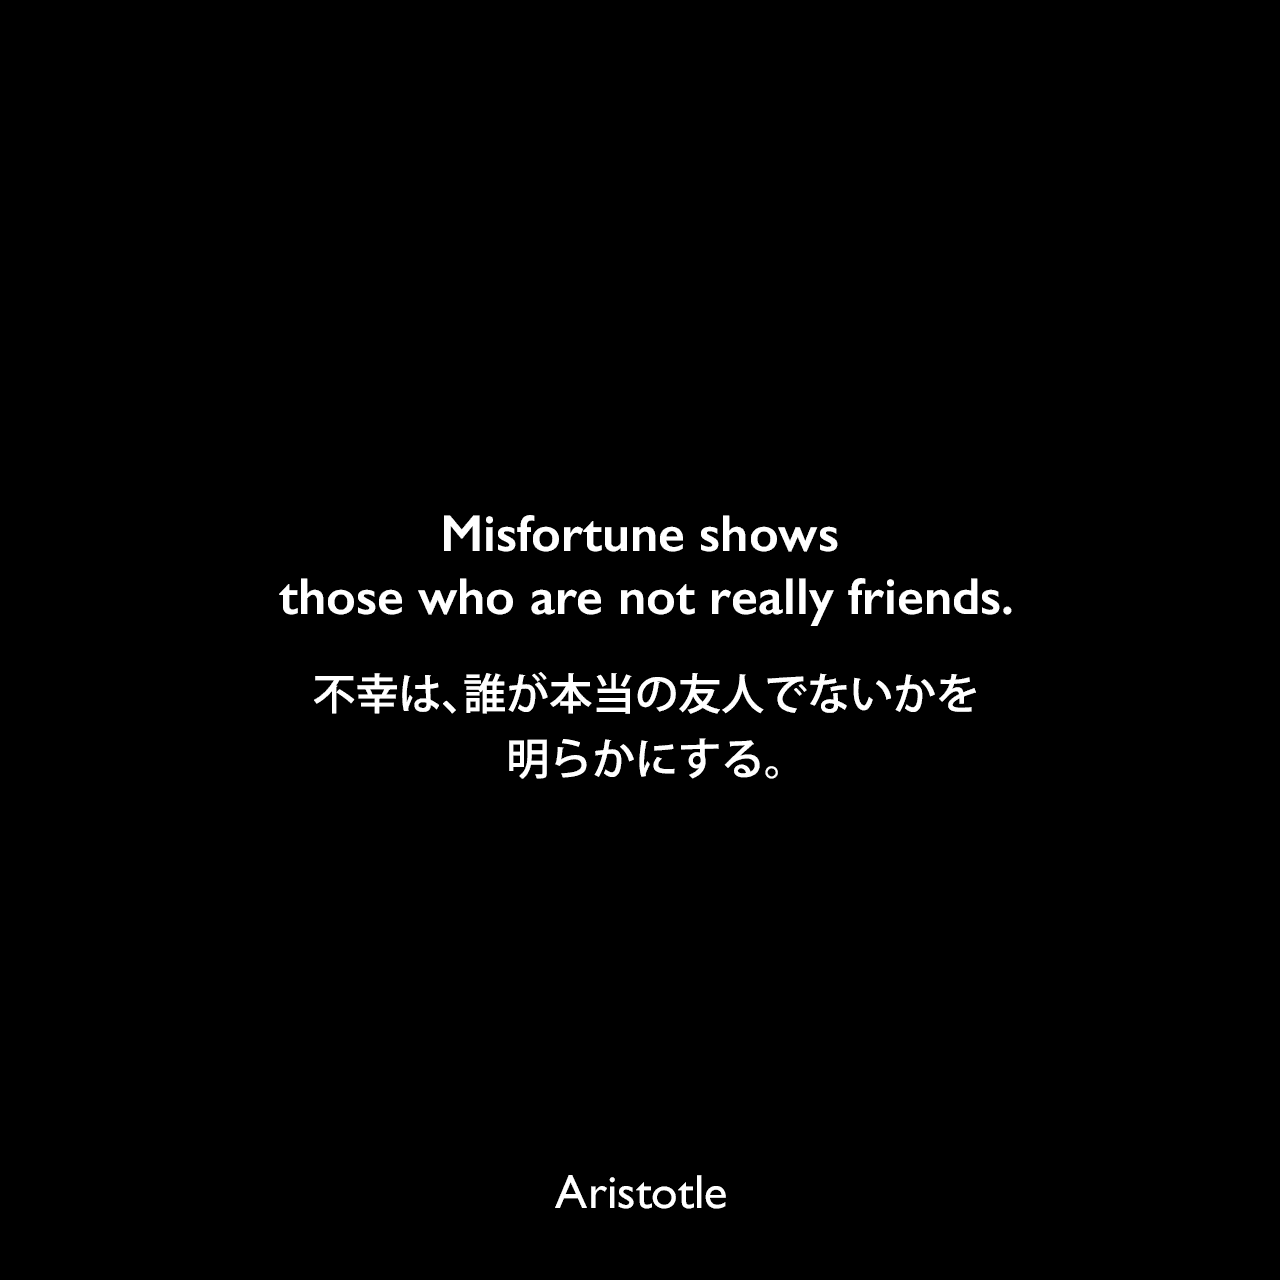 Misfortune shows those who are not really friends.不幸は、誰が本当の友人でないかを明らかにする。- アリストテレスの著書「エウデモス倫理学」よりAristotle